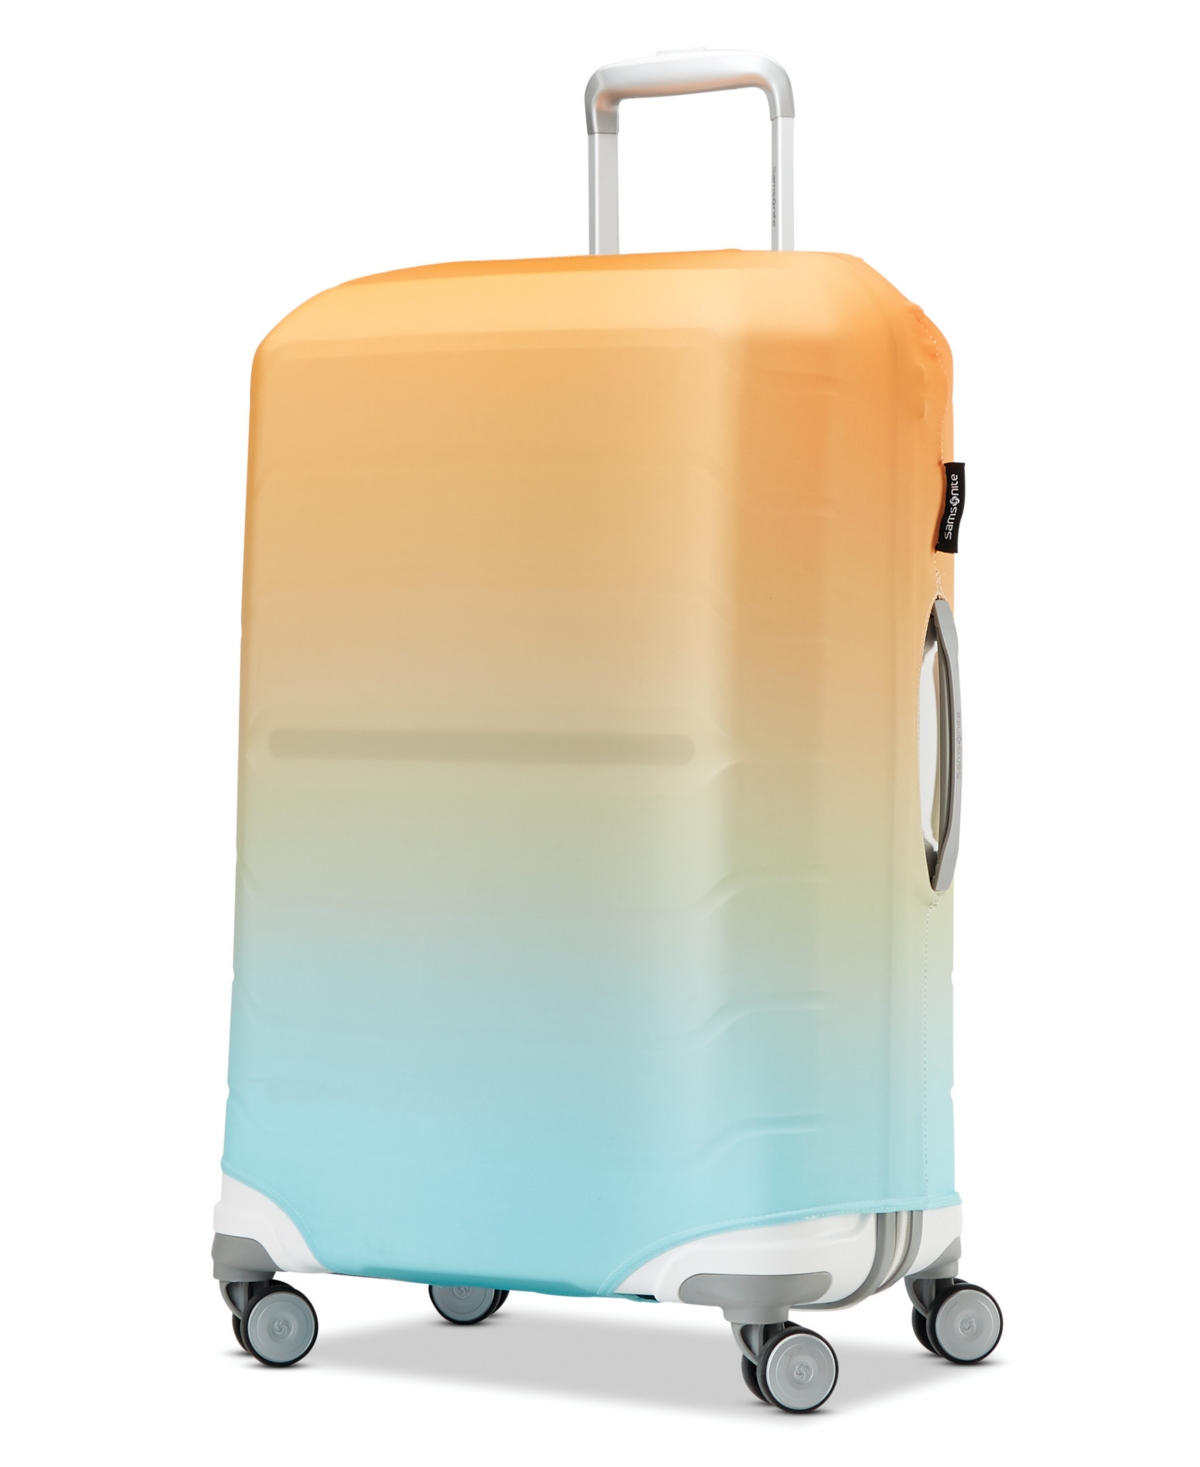 Printed Luggage Color Xl - Blue, Orange Ombre